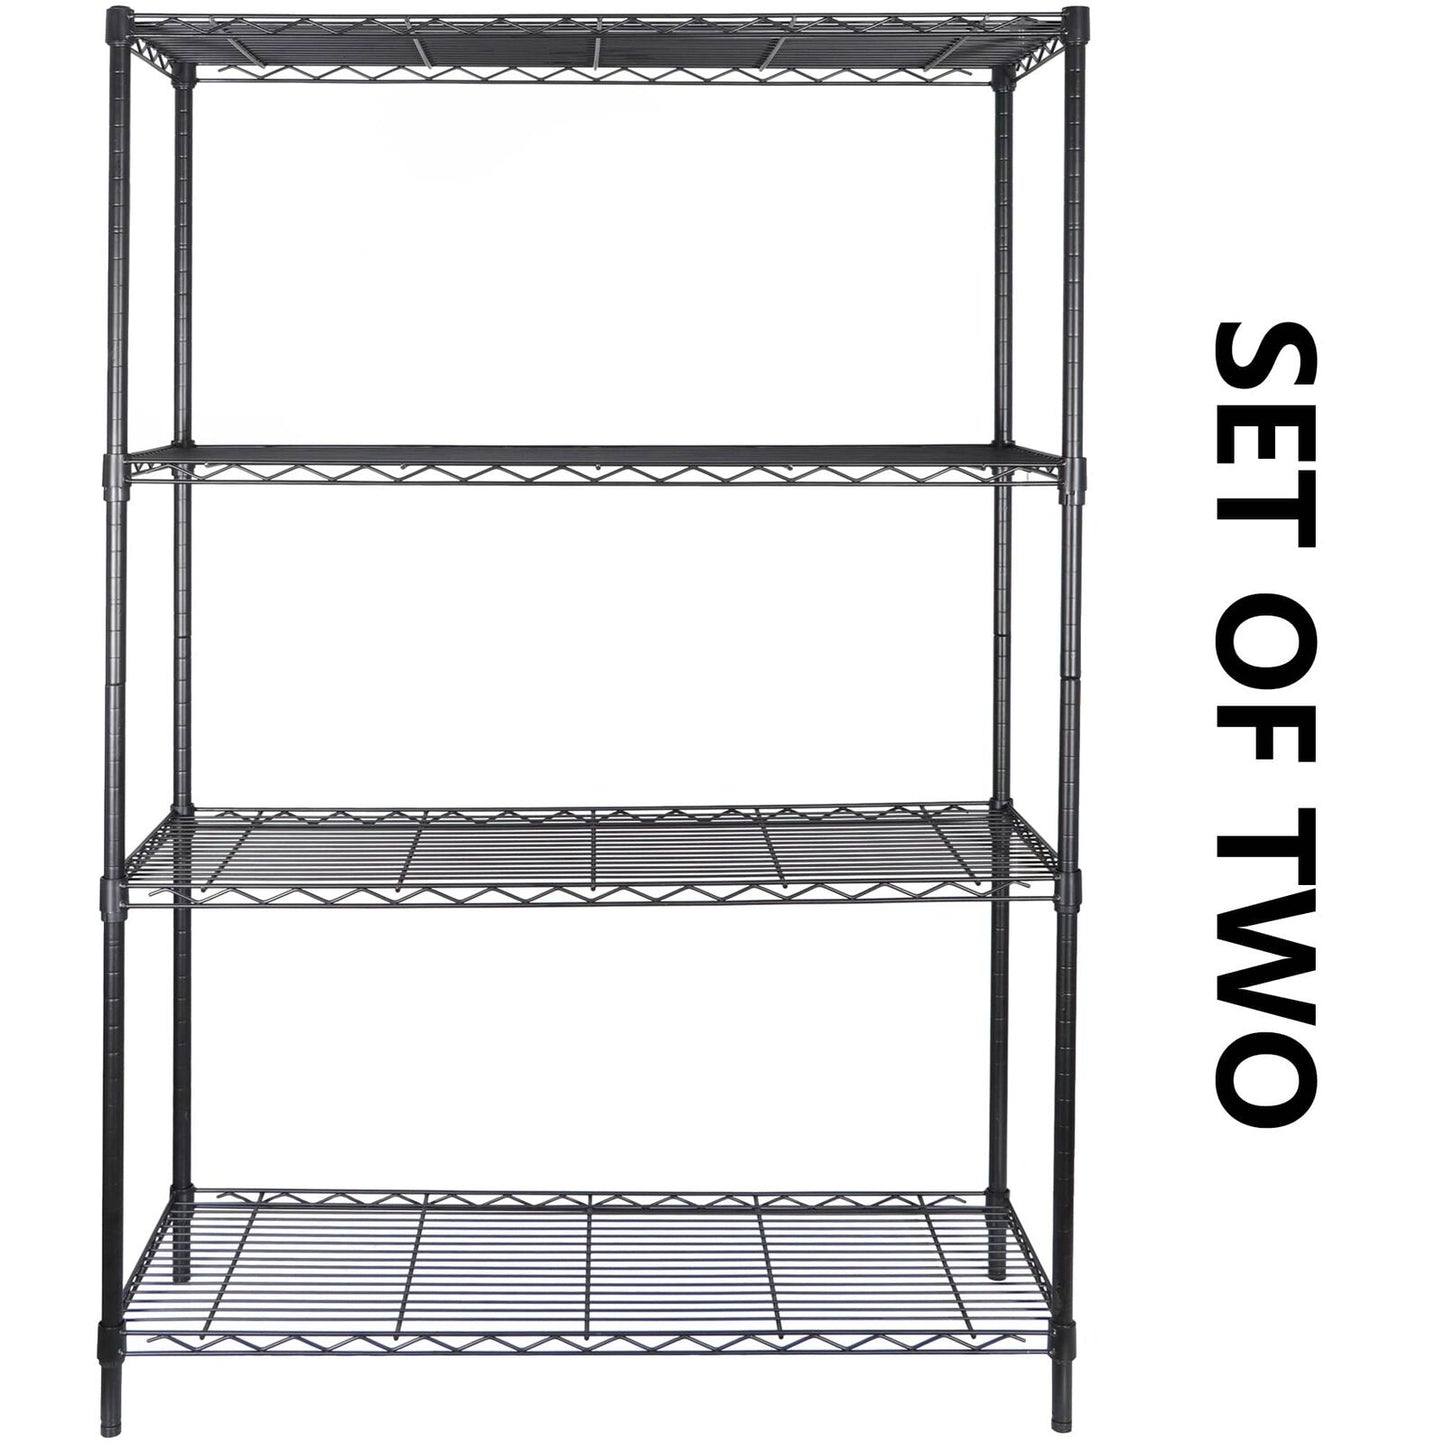 2x 4-Tier Heavy Duty Storage Shelves Garage Shelf Metal Shelving Organization